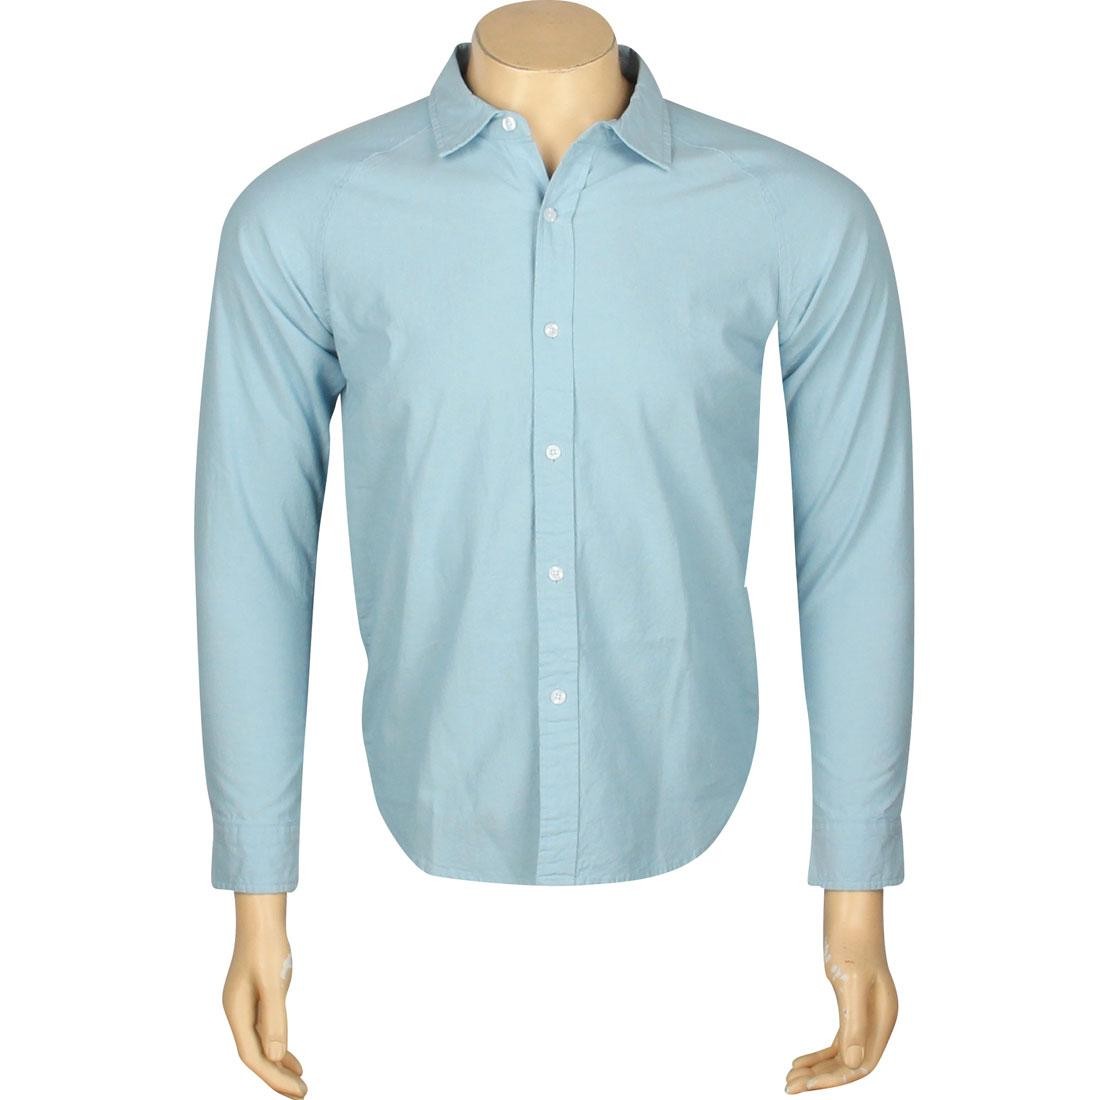 Undefeated Vintage Chambray Long Sleeve MAISON shirt (blue / light blue)